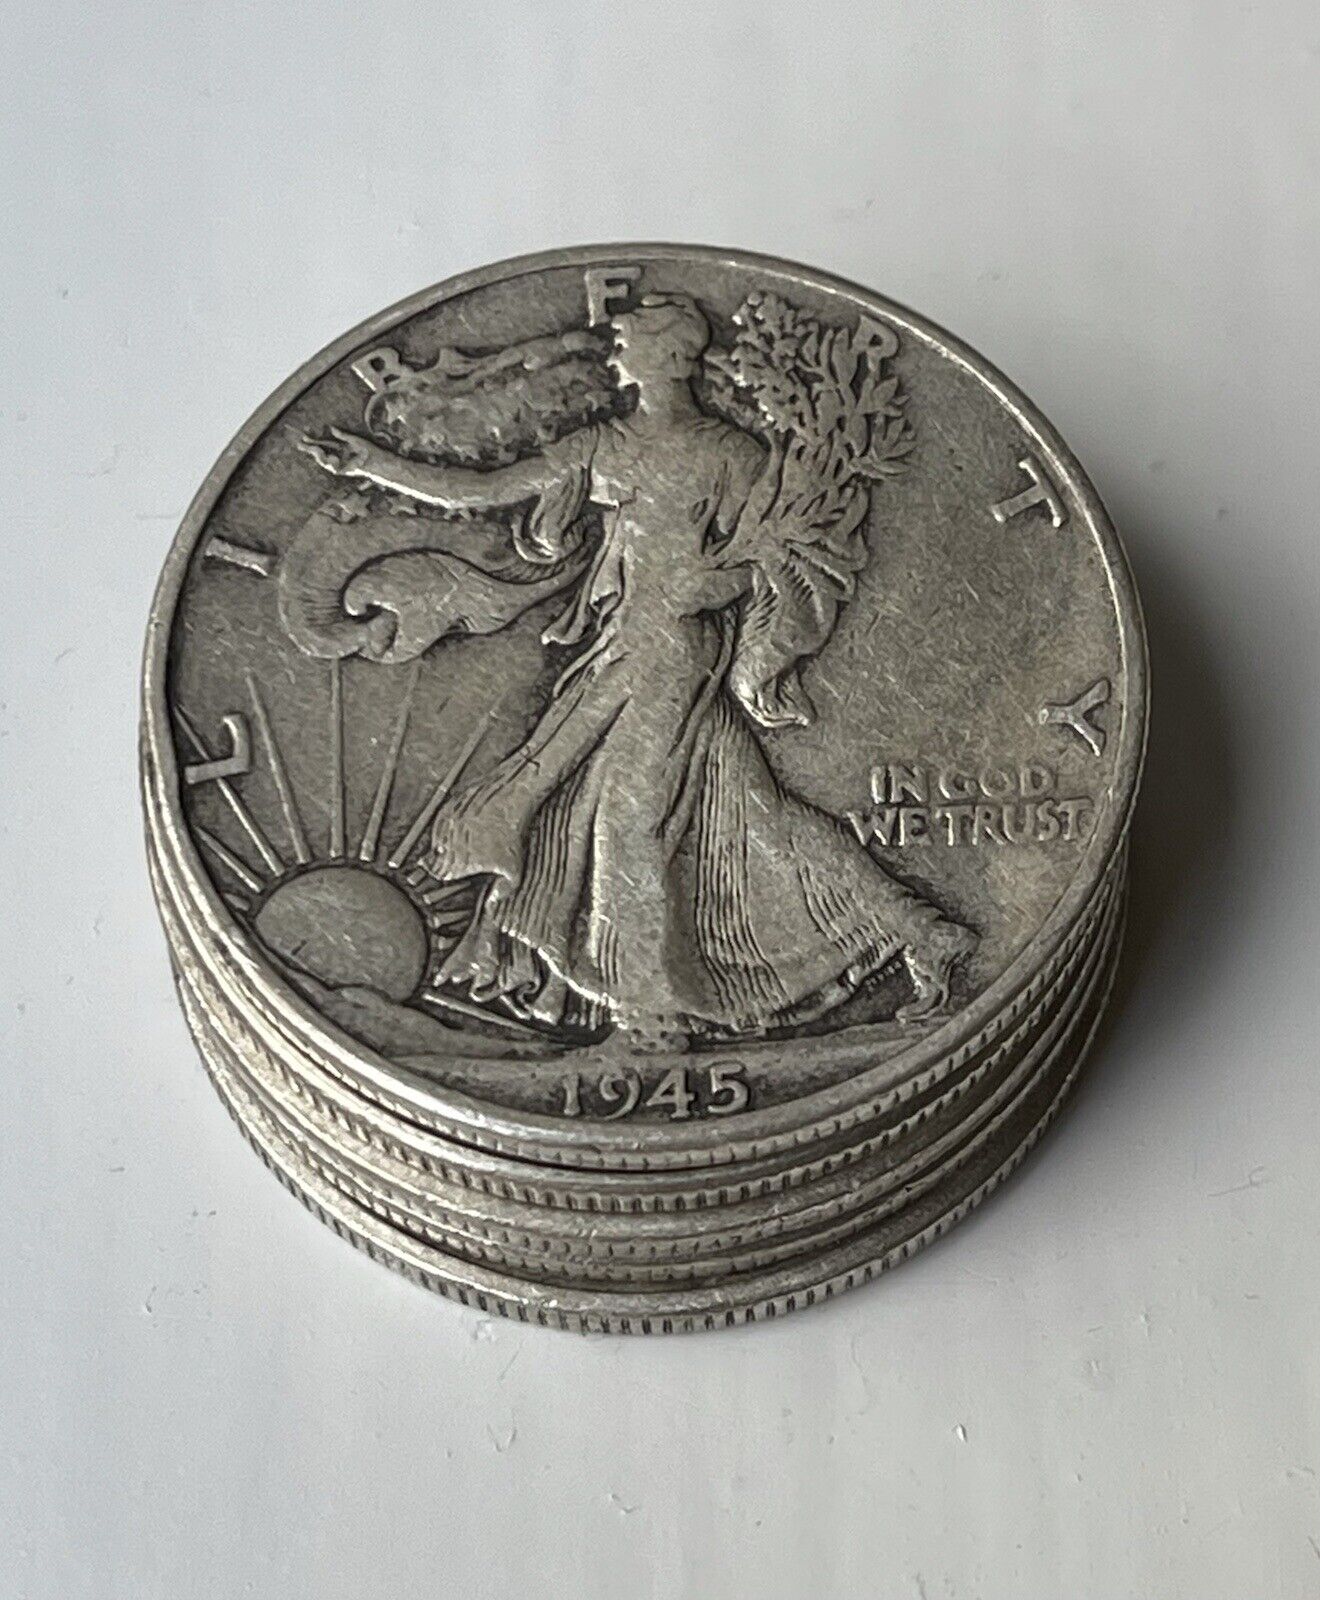 [Lot of 5] Walking Liberty Half Dollar - 90% Silver - Choose How Many Lots of 5